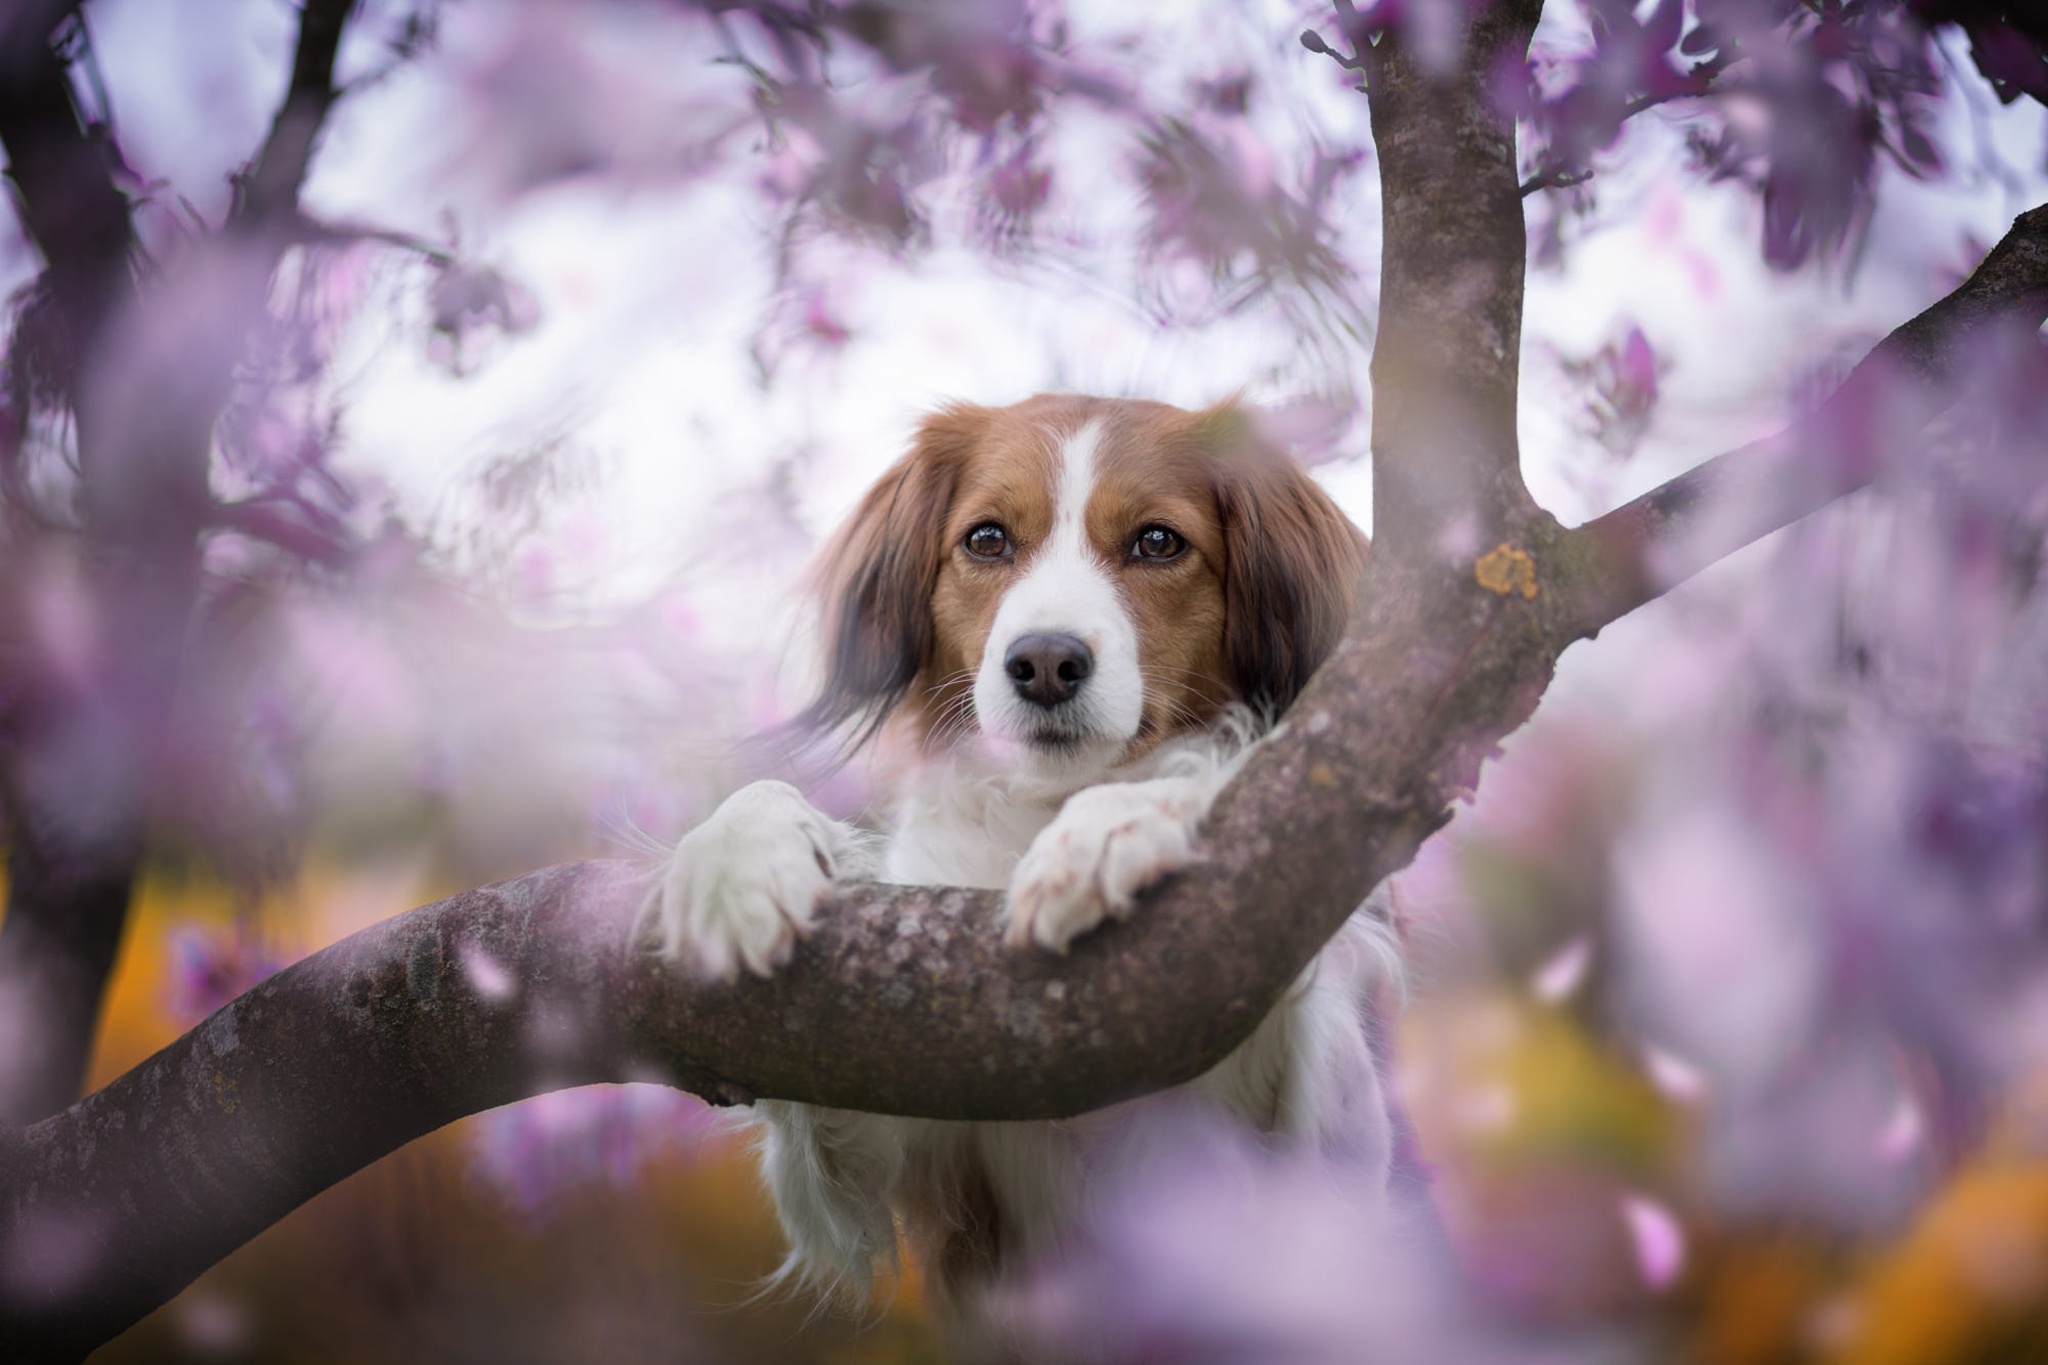 Dog near a flowering tree